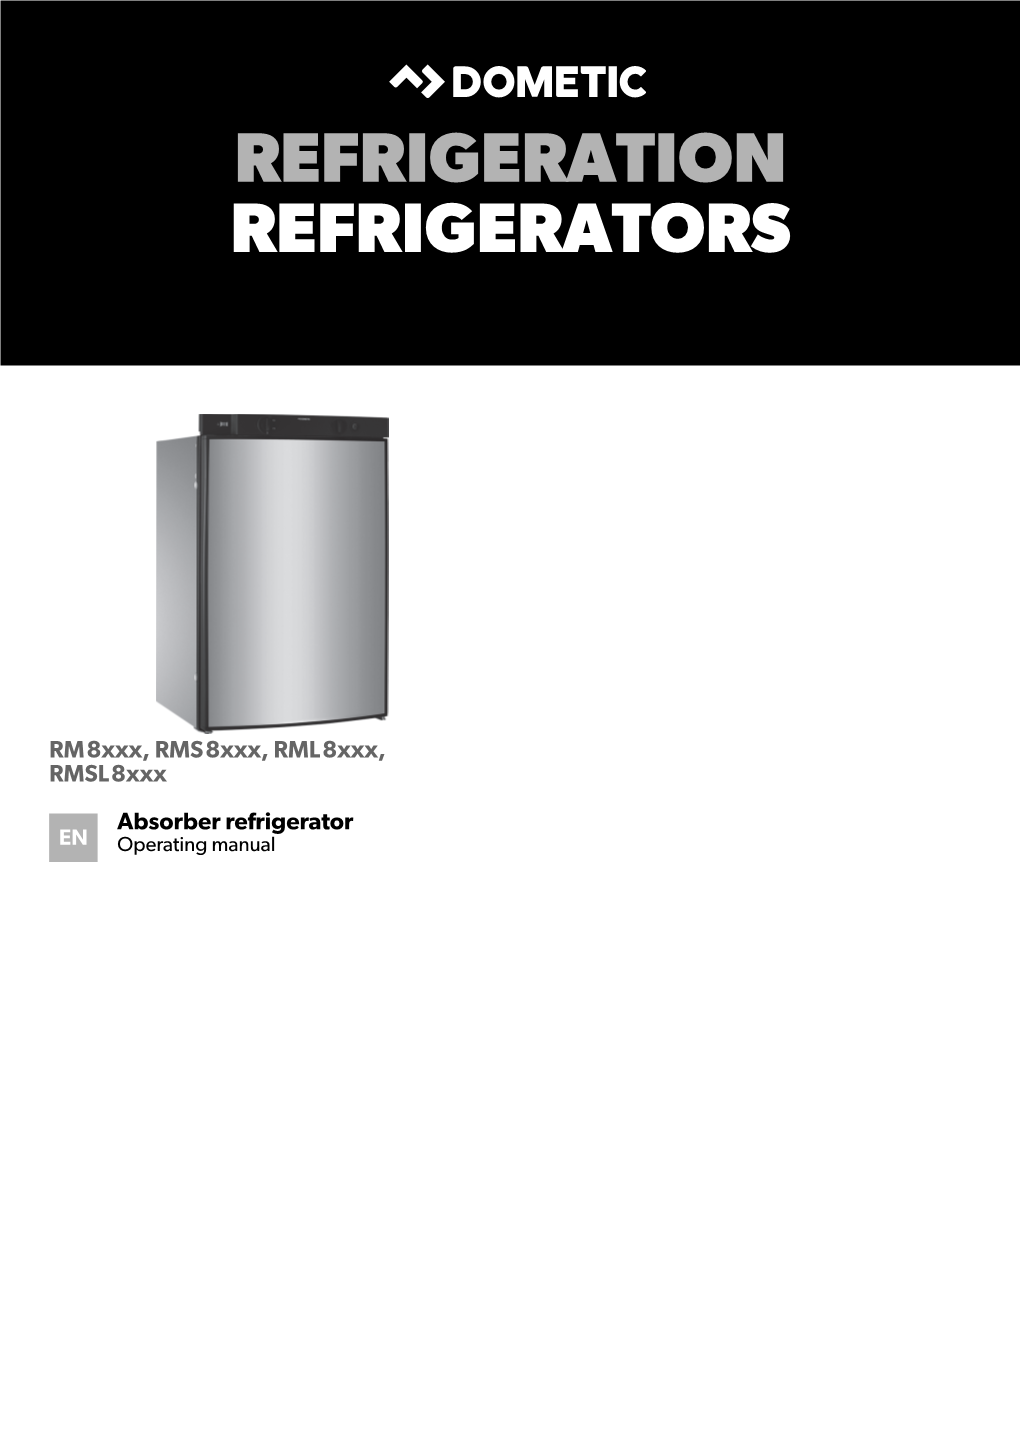 Refrigeration Refrigerators